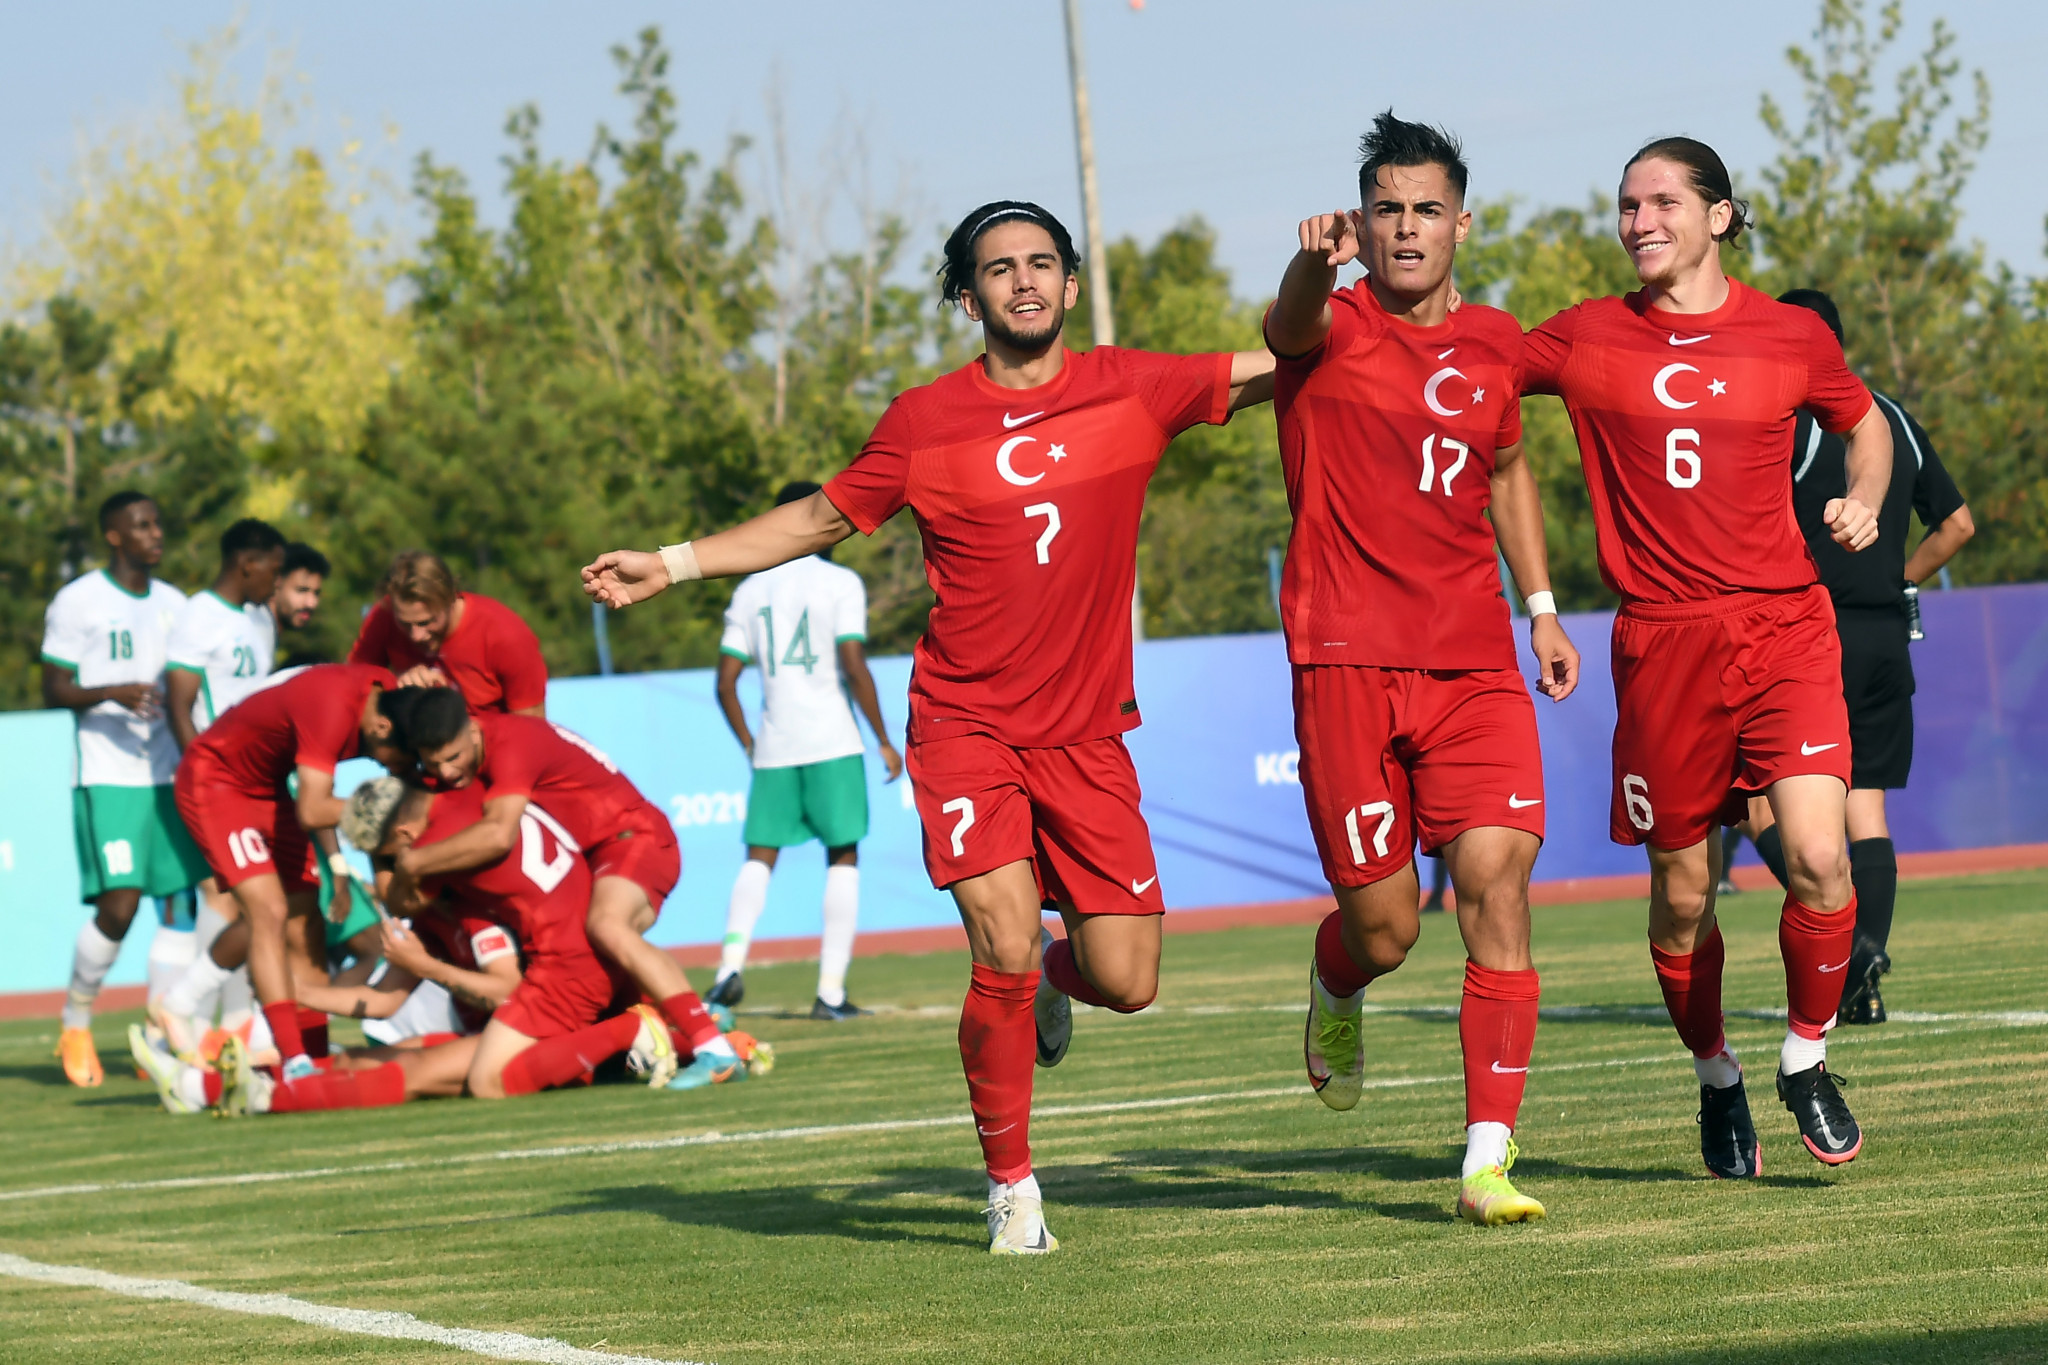 Metehan Altunbaş scored the only goal of the game as Turkey overcame Saudi Arabia 1-0 in the football final ©Konya 2021